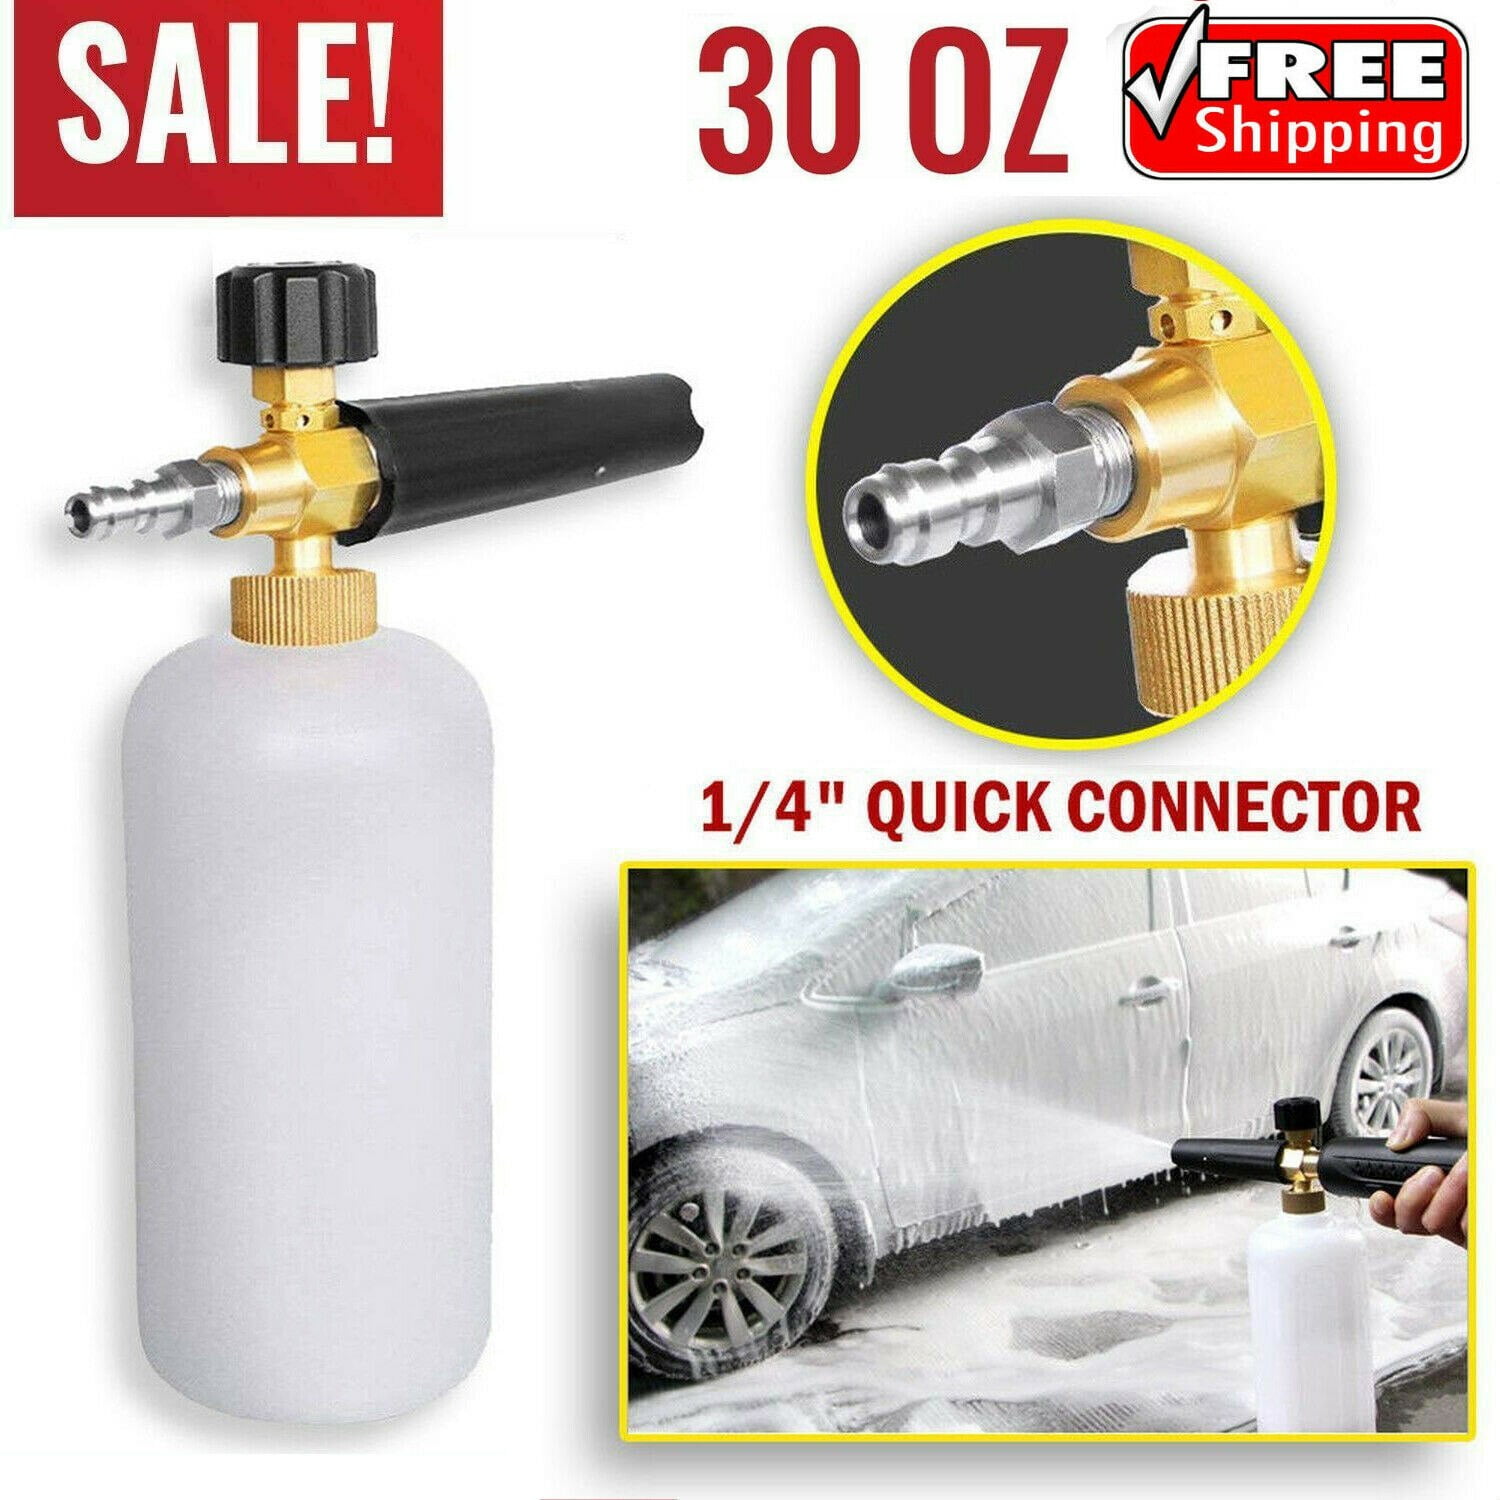 Pressure Snow Foam Washer Jet Car Wash Adjustable Cannon Soap Sprayer Ti